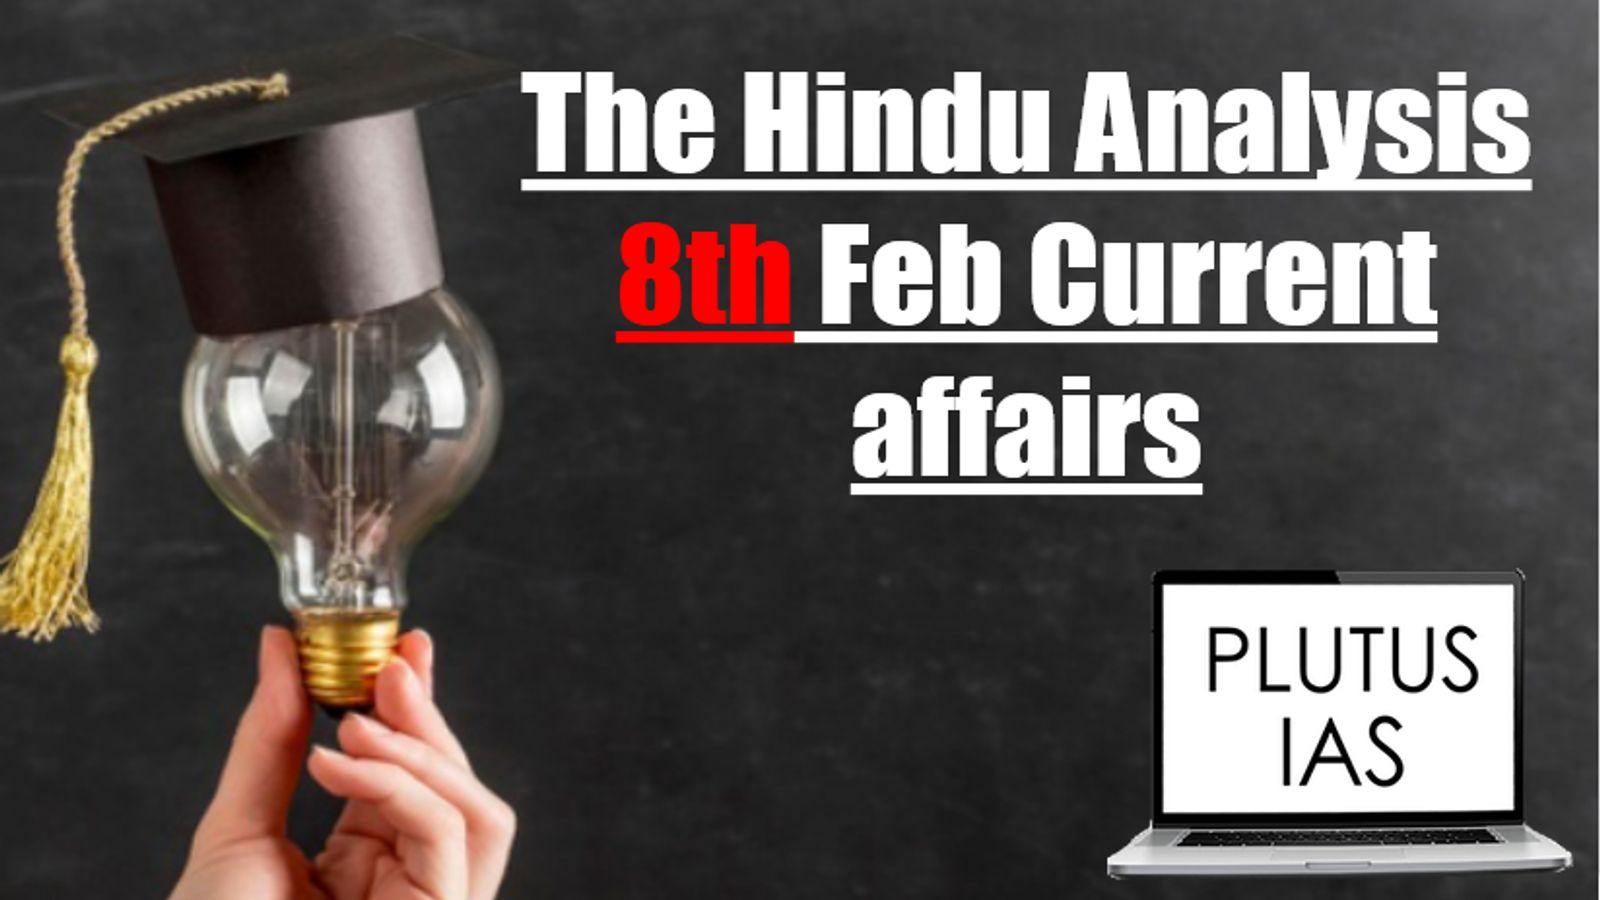 The Hindu Analysis 8th February